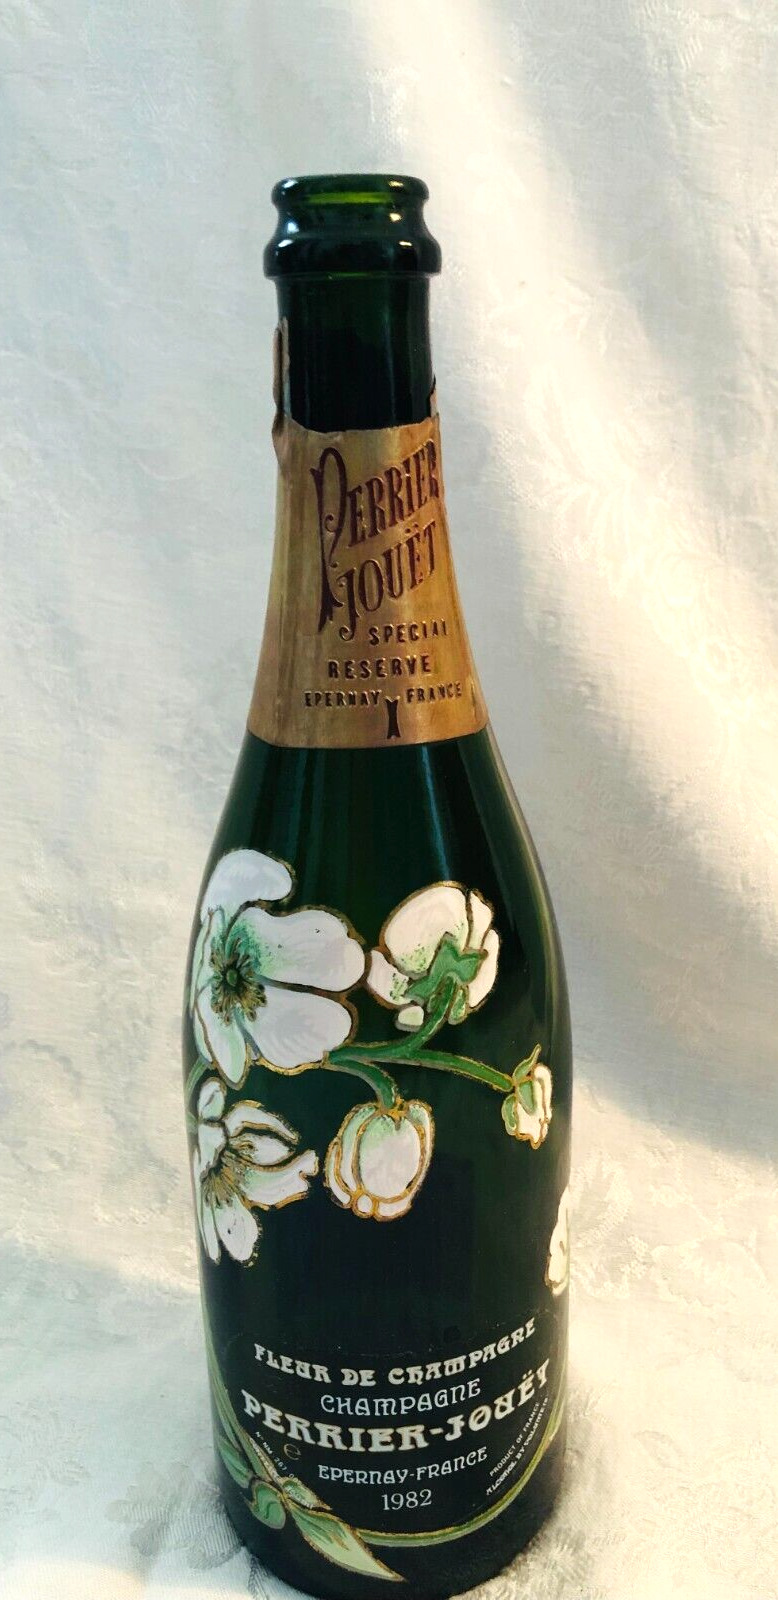 1982 Perrier Jouet Champagne Empty Bottle, Epernay France